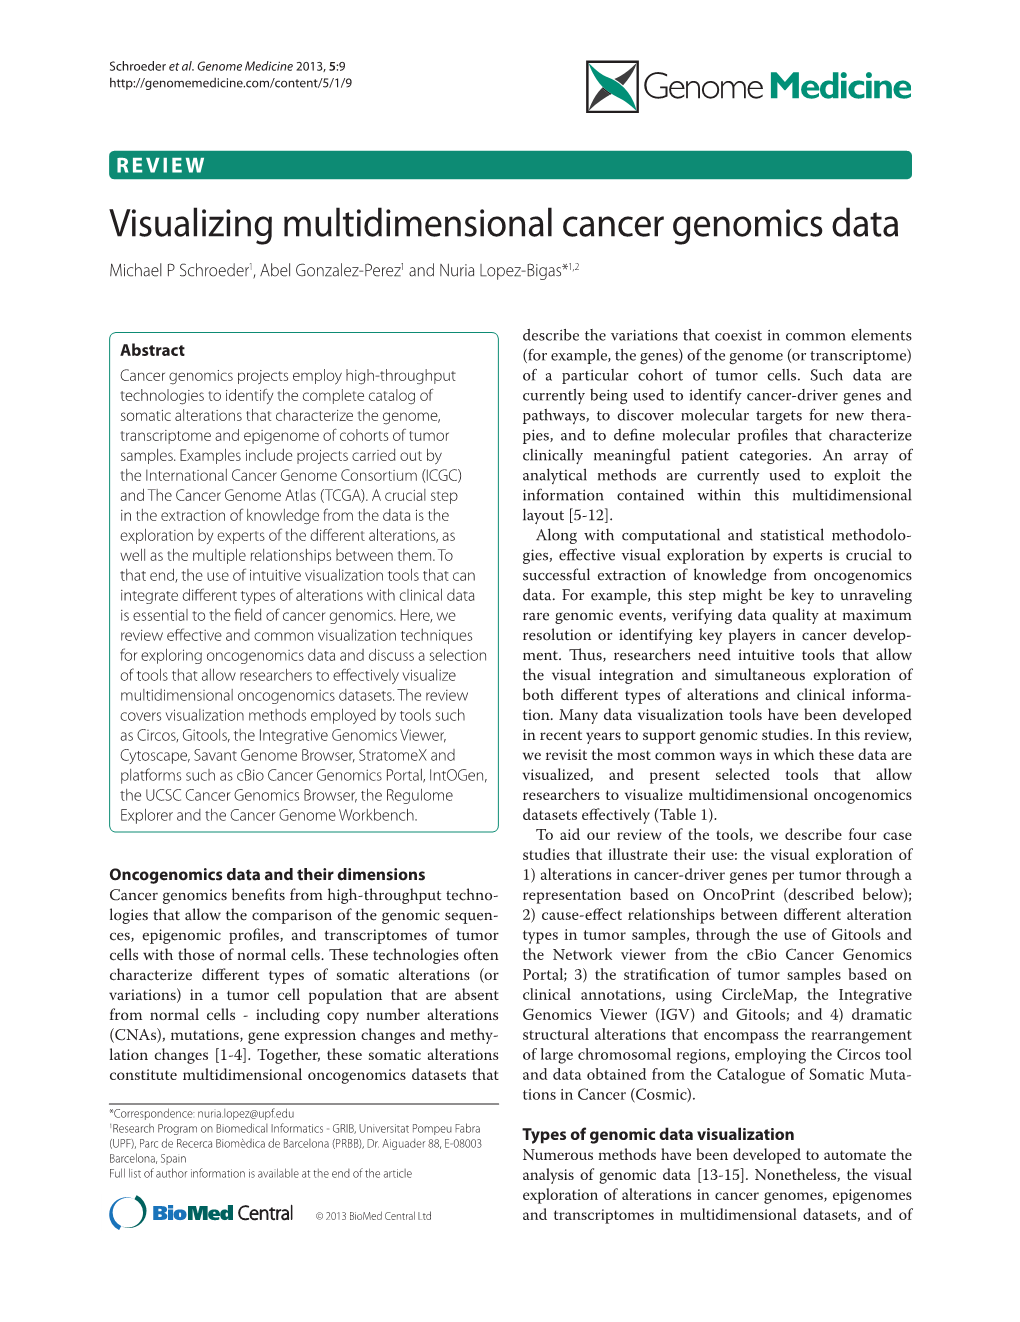 Visualizing Multidimensional Cancer Genomics Data Michael P Schroeder1, Abel Gonzalez-Perez1 and Nuria Lopez-Bigas*1,2